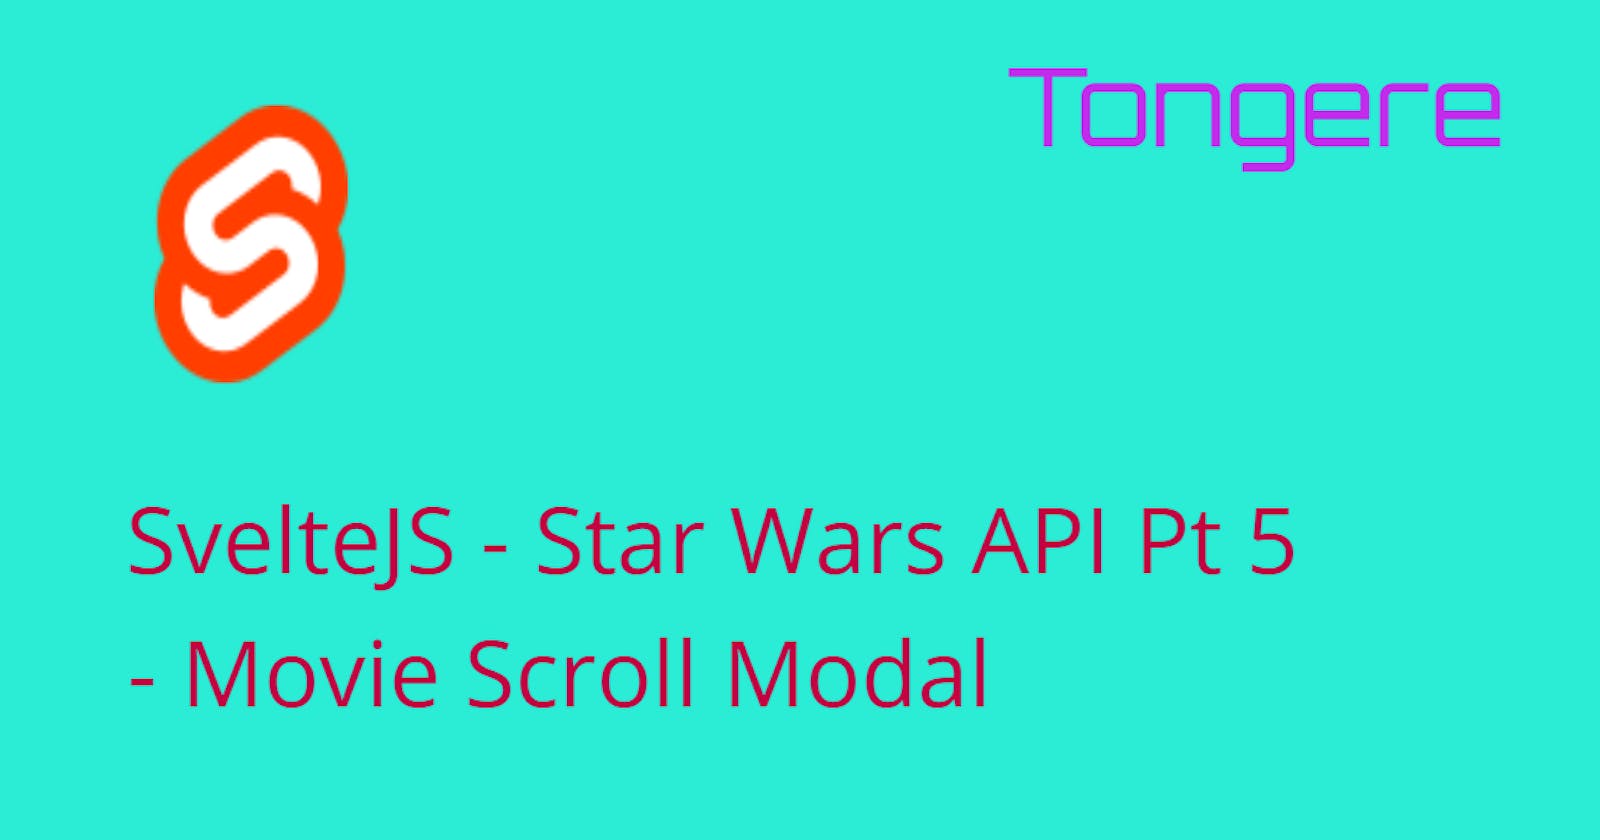 Svelte App using the Star Wars API Pt 5, Adding the movie scroll modal